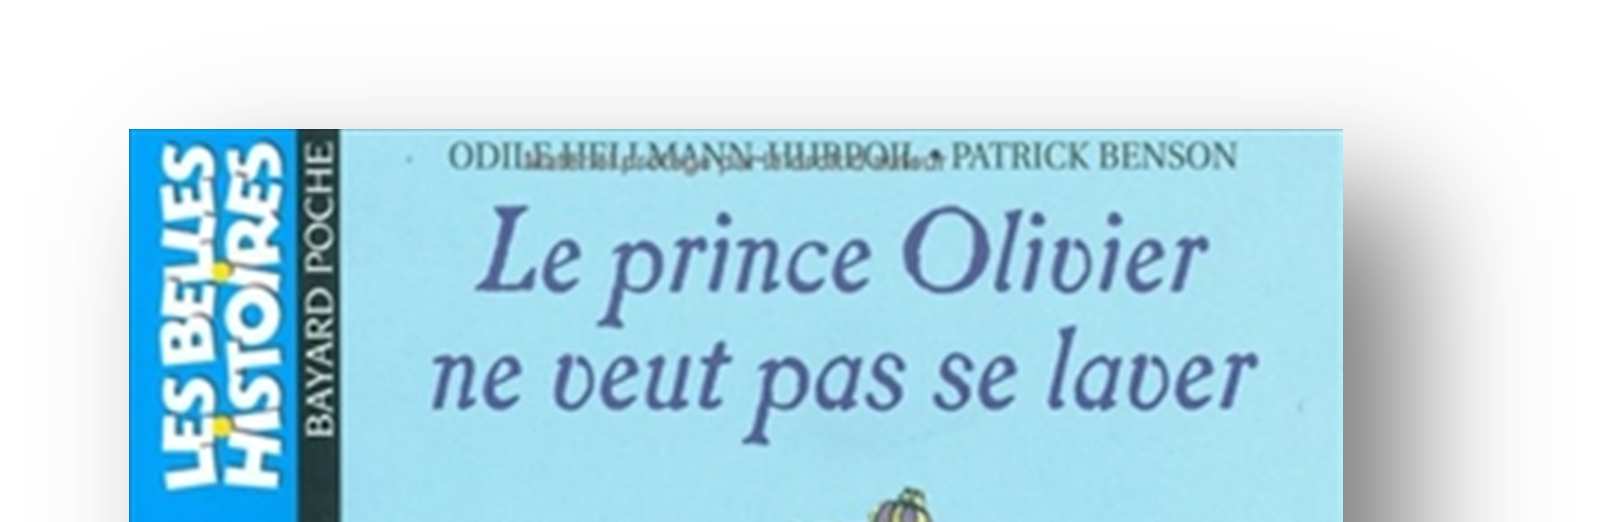 Le prince Olivier ne veut